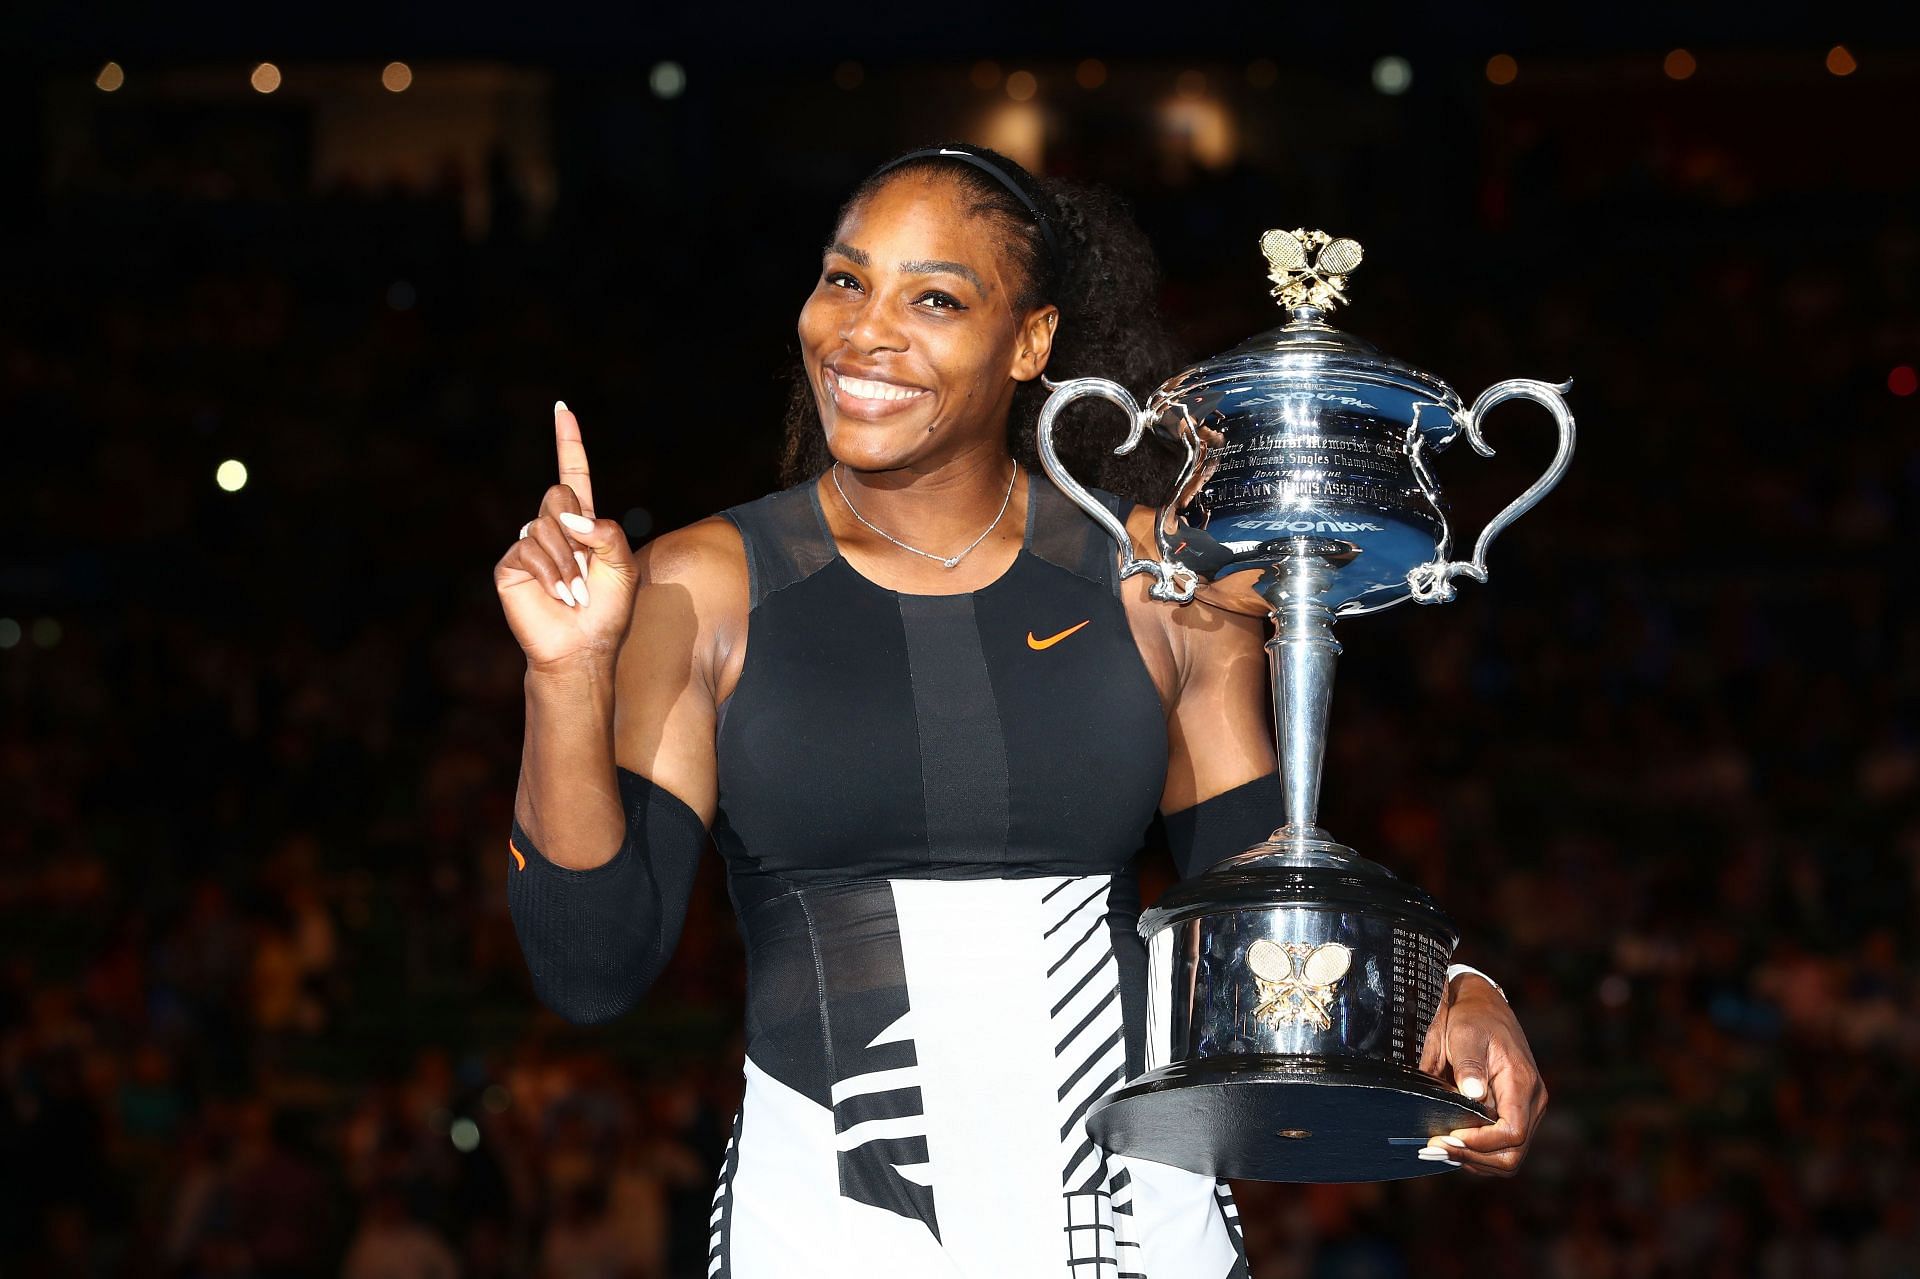 Serena Williams at the 2017 Australian Open - Day 13